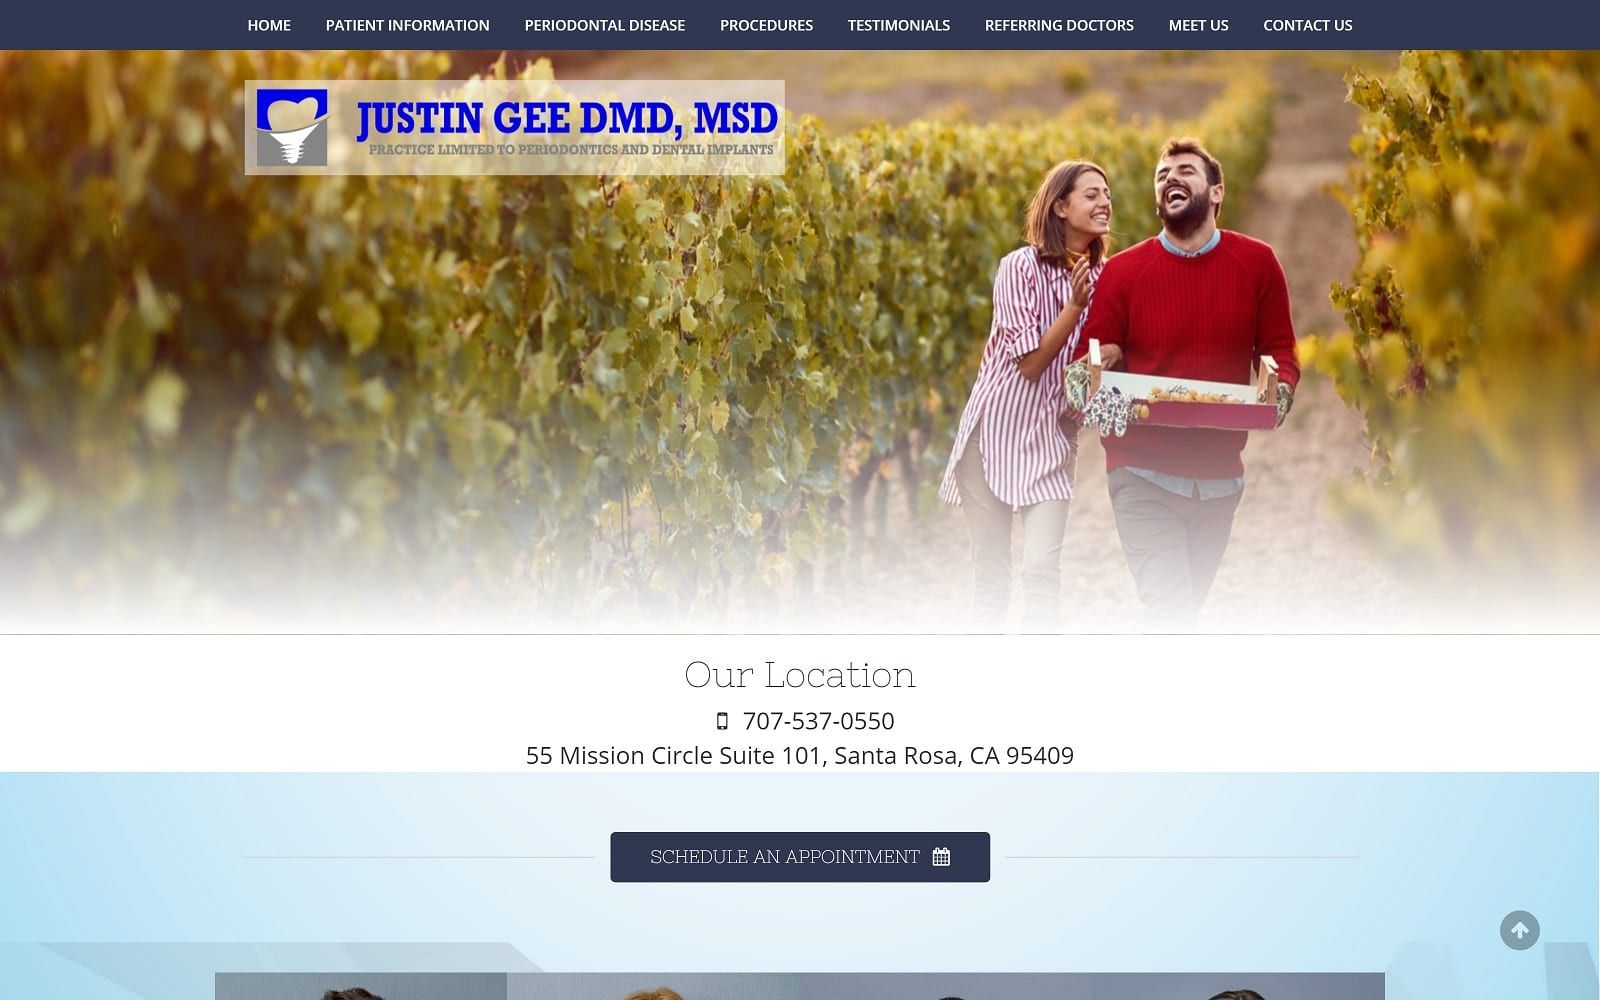 The screenshot of justin gee dmd, msd periopop. Com website